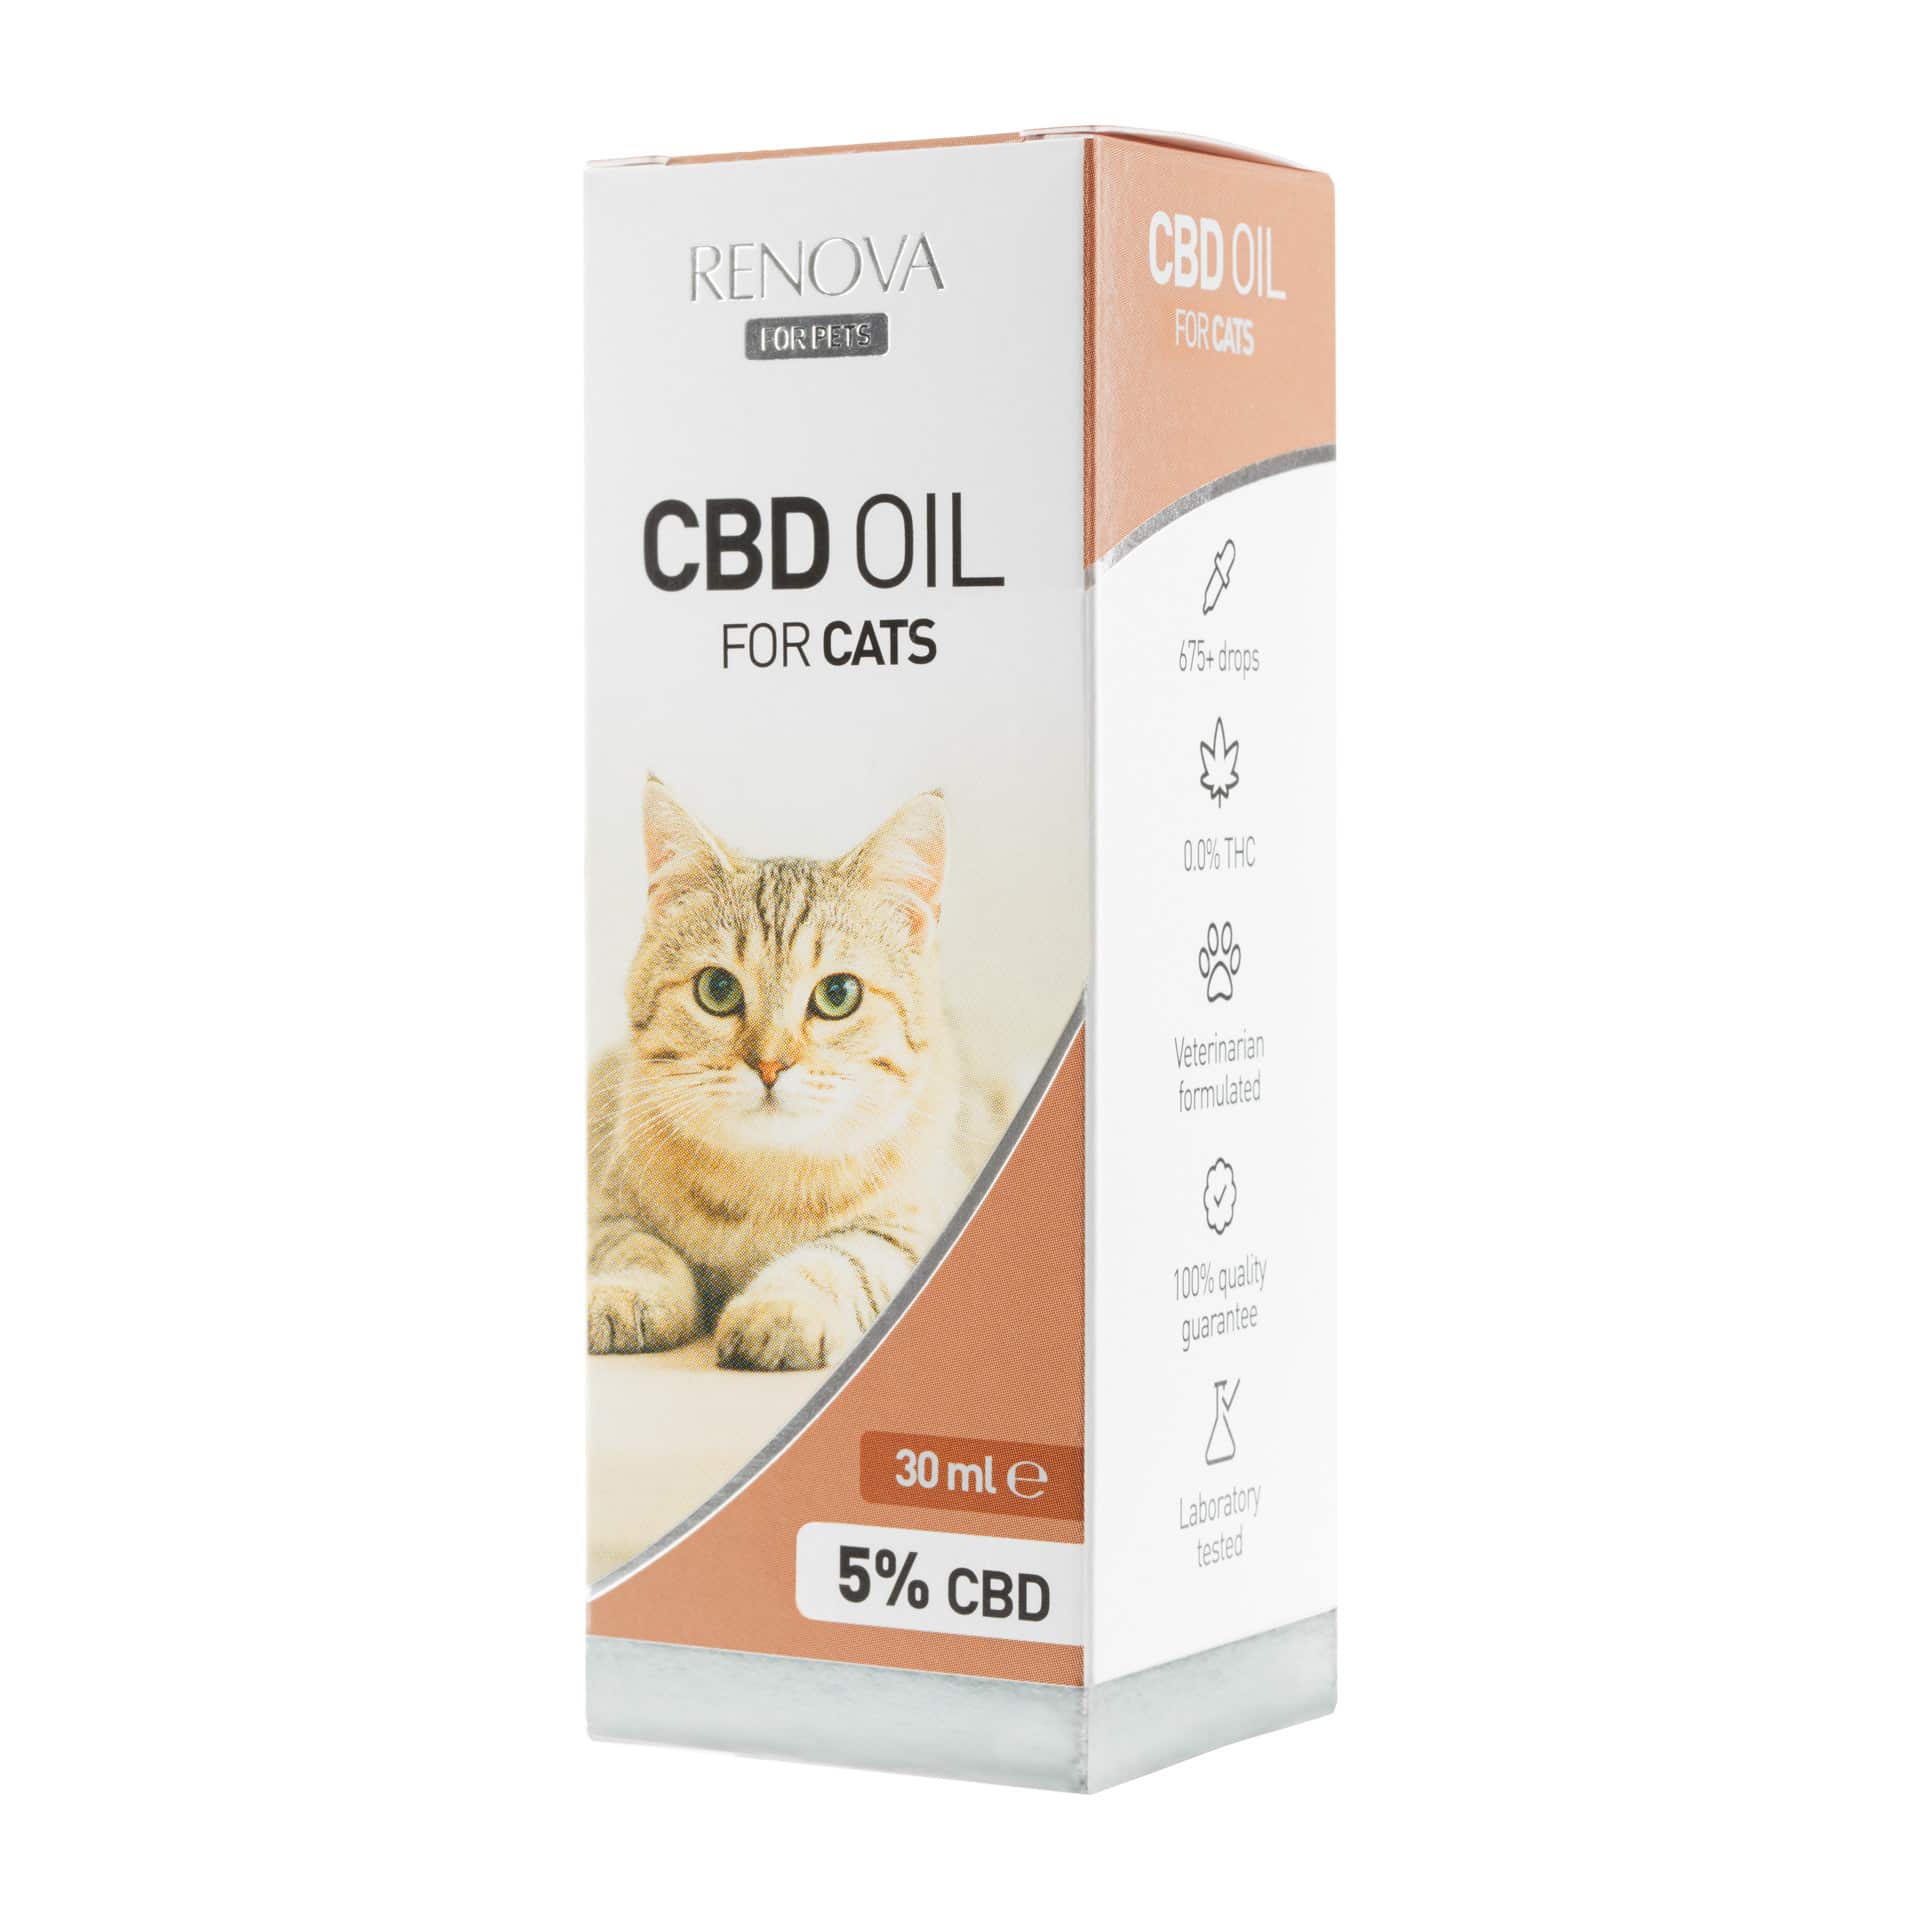 A Renova - CBD oil 5% for cats (30ml) on a white background.